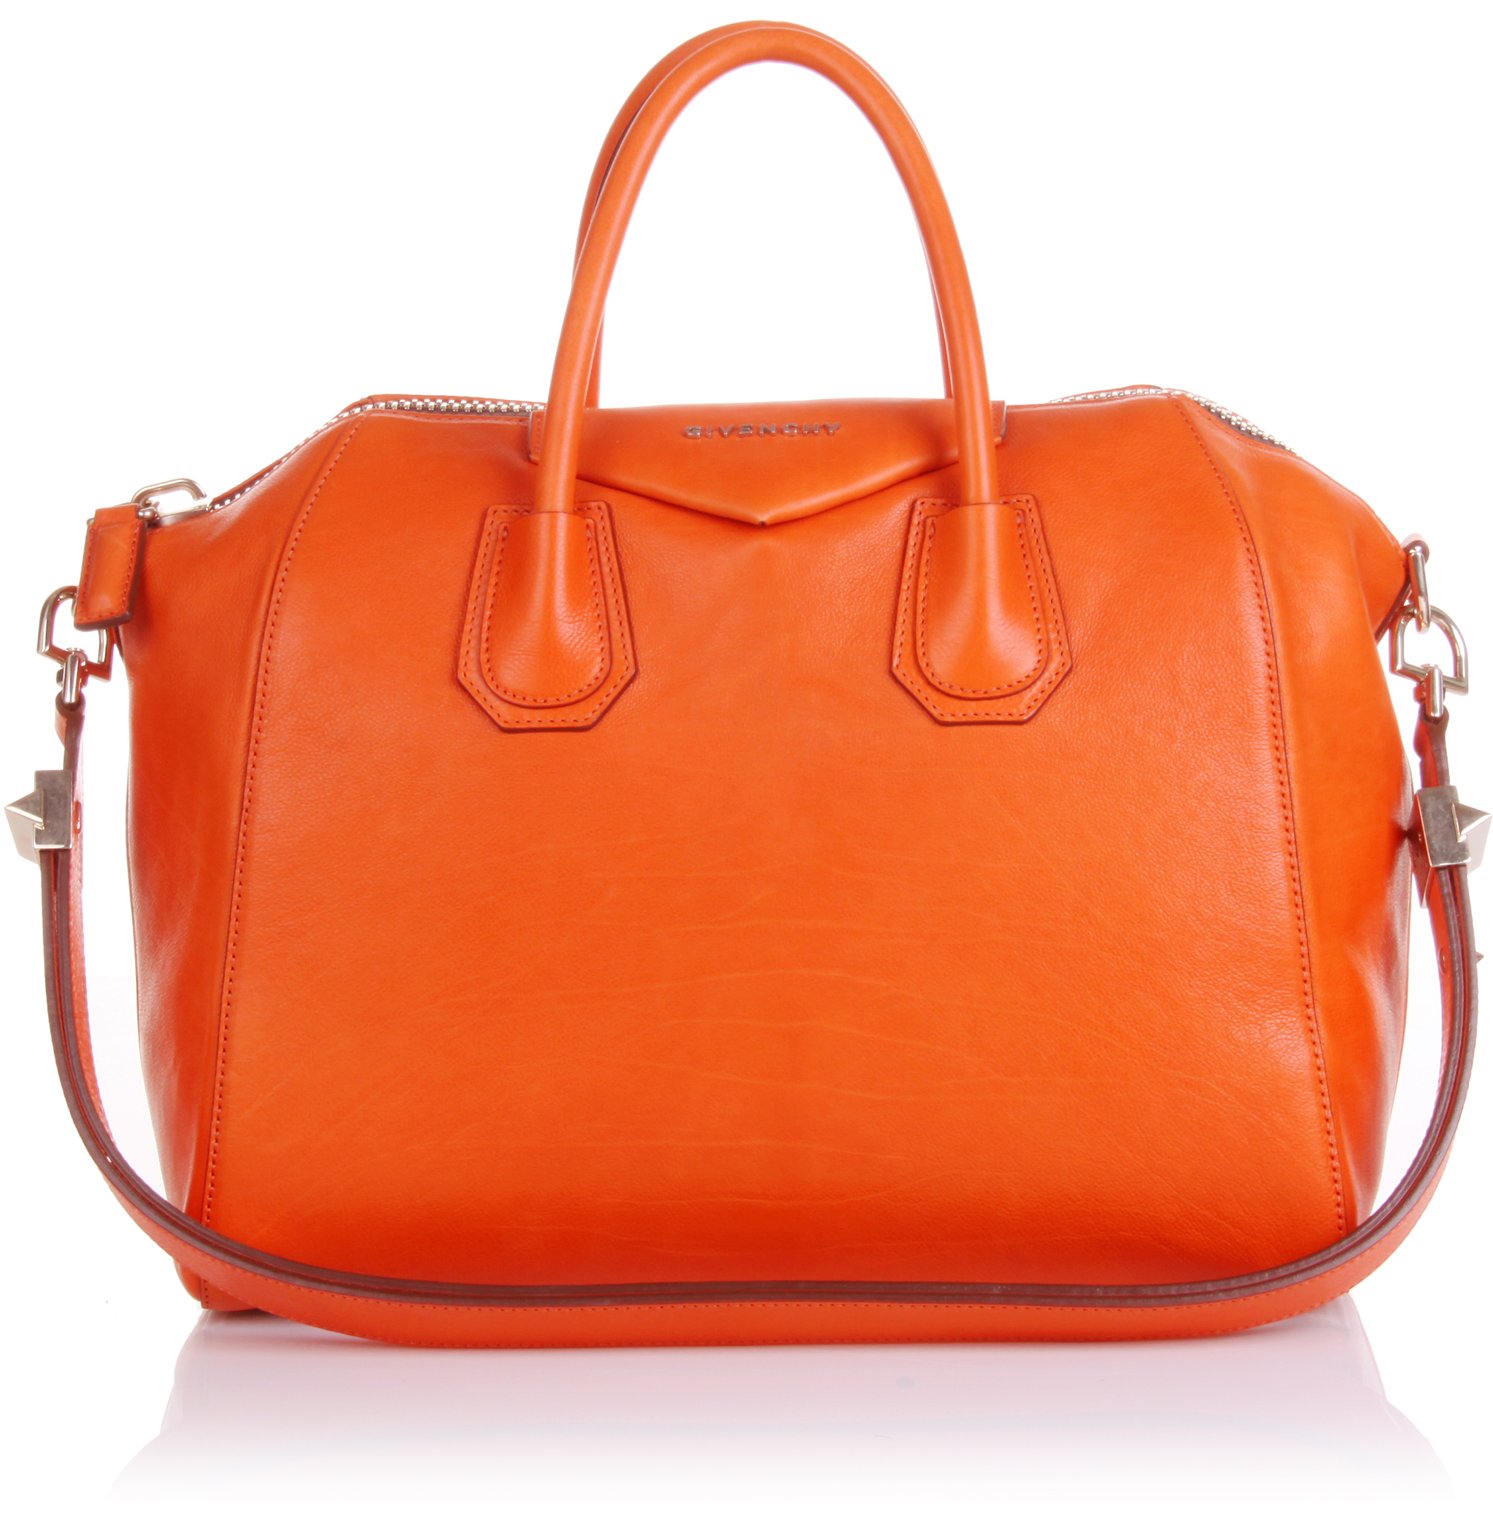 Givenchy Antigona Medium Bag in Orange | Lyst